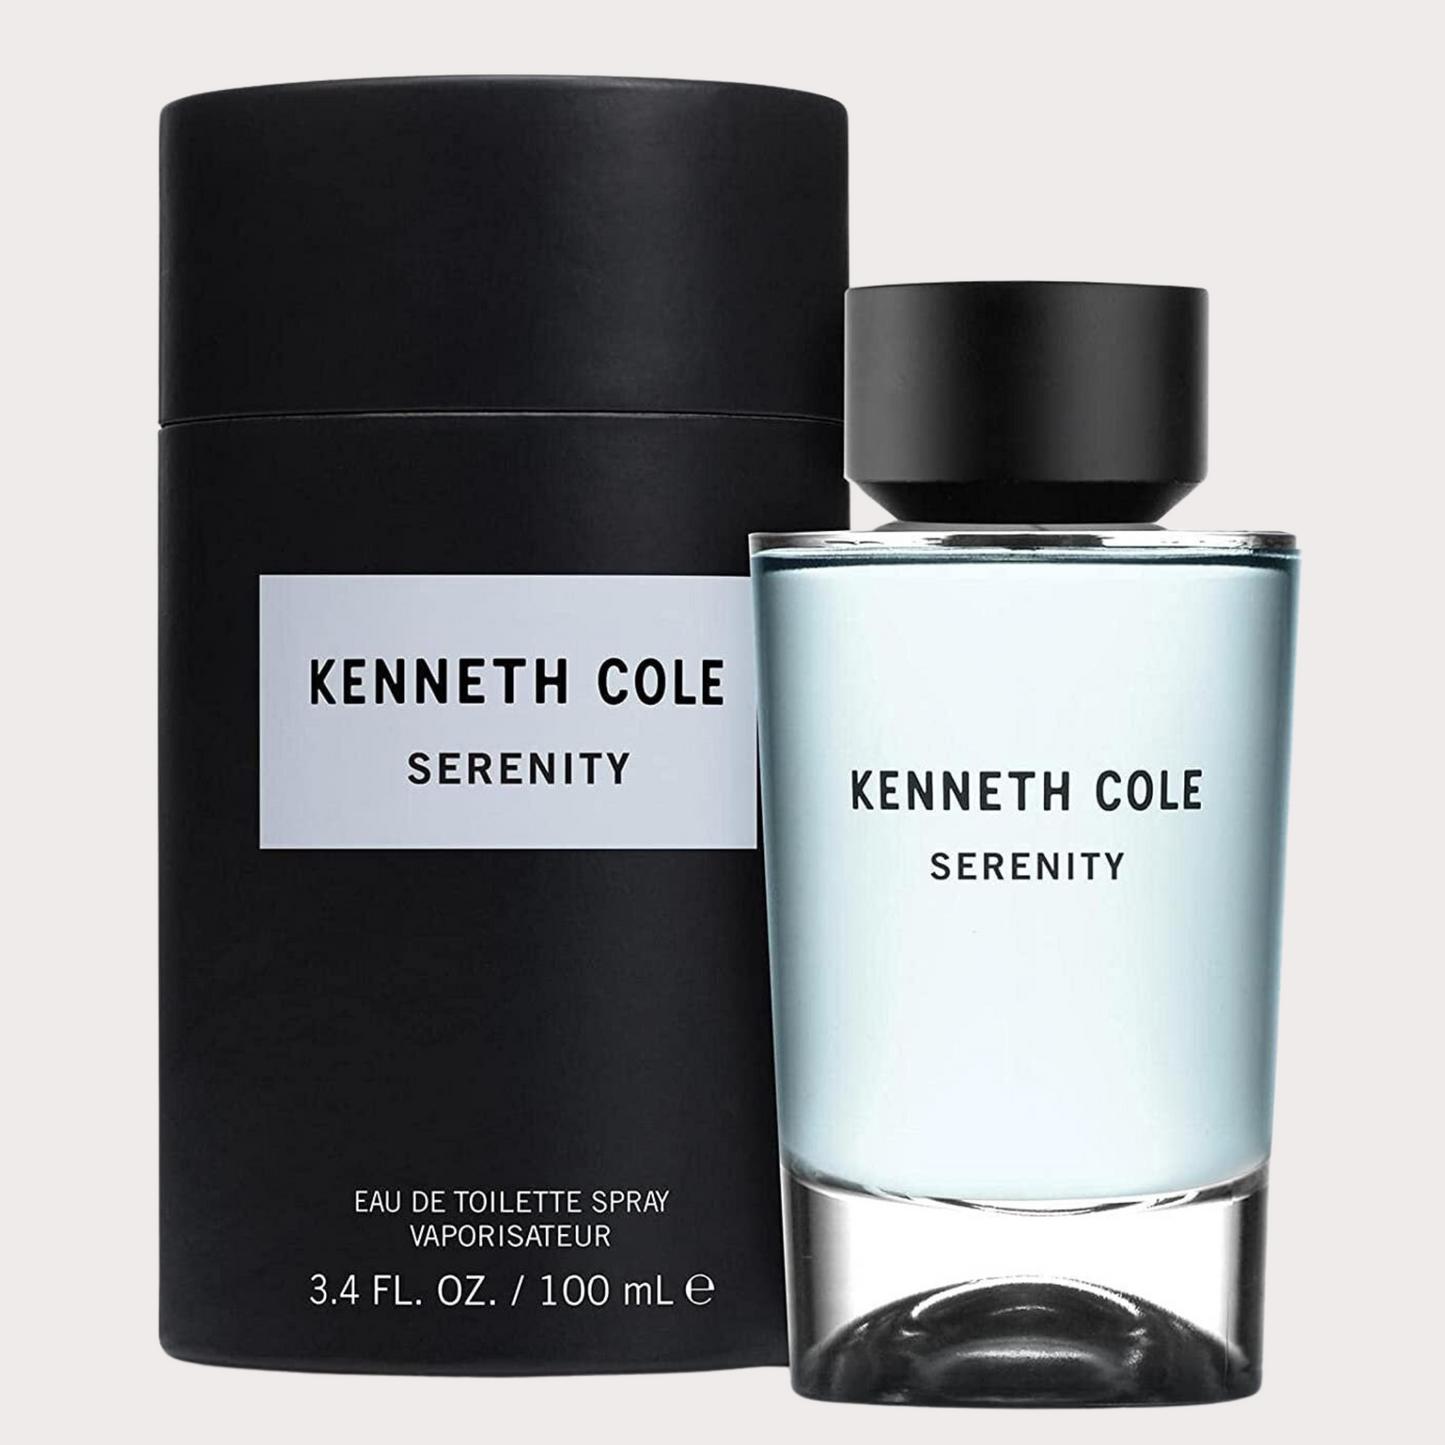 Kenneth Cole Serenity Eau de Toilette Spray